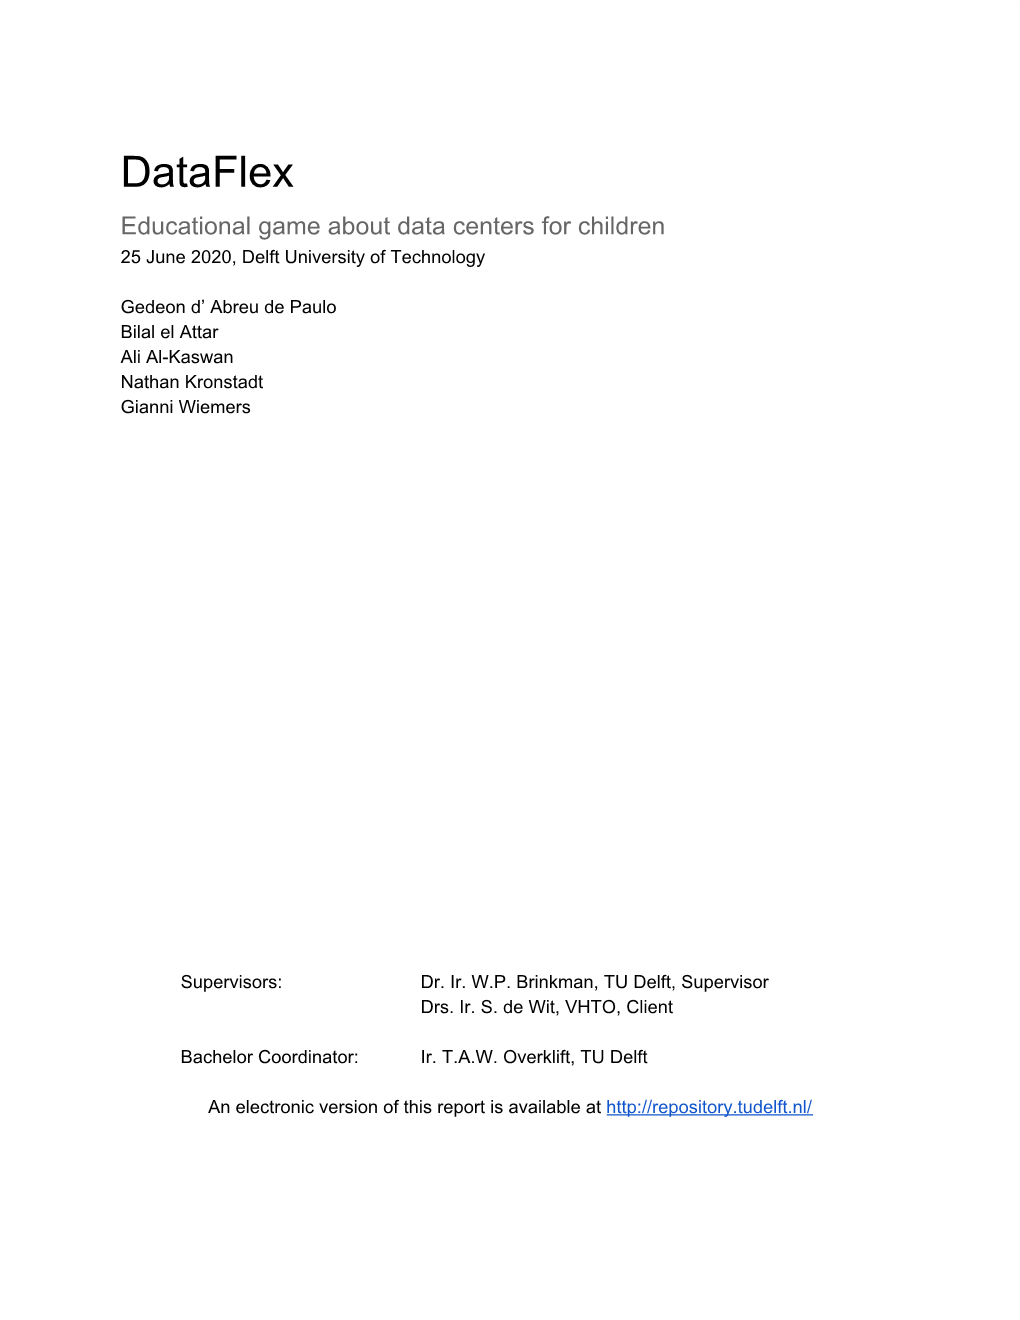 Dataflex Educational Game About Data Centers for Children 25 June 2020, Delft University of Technology